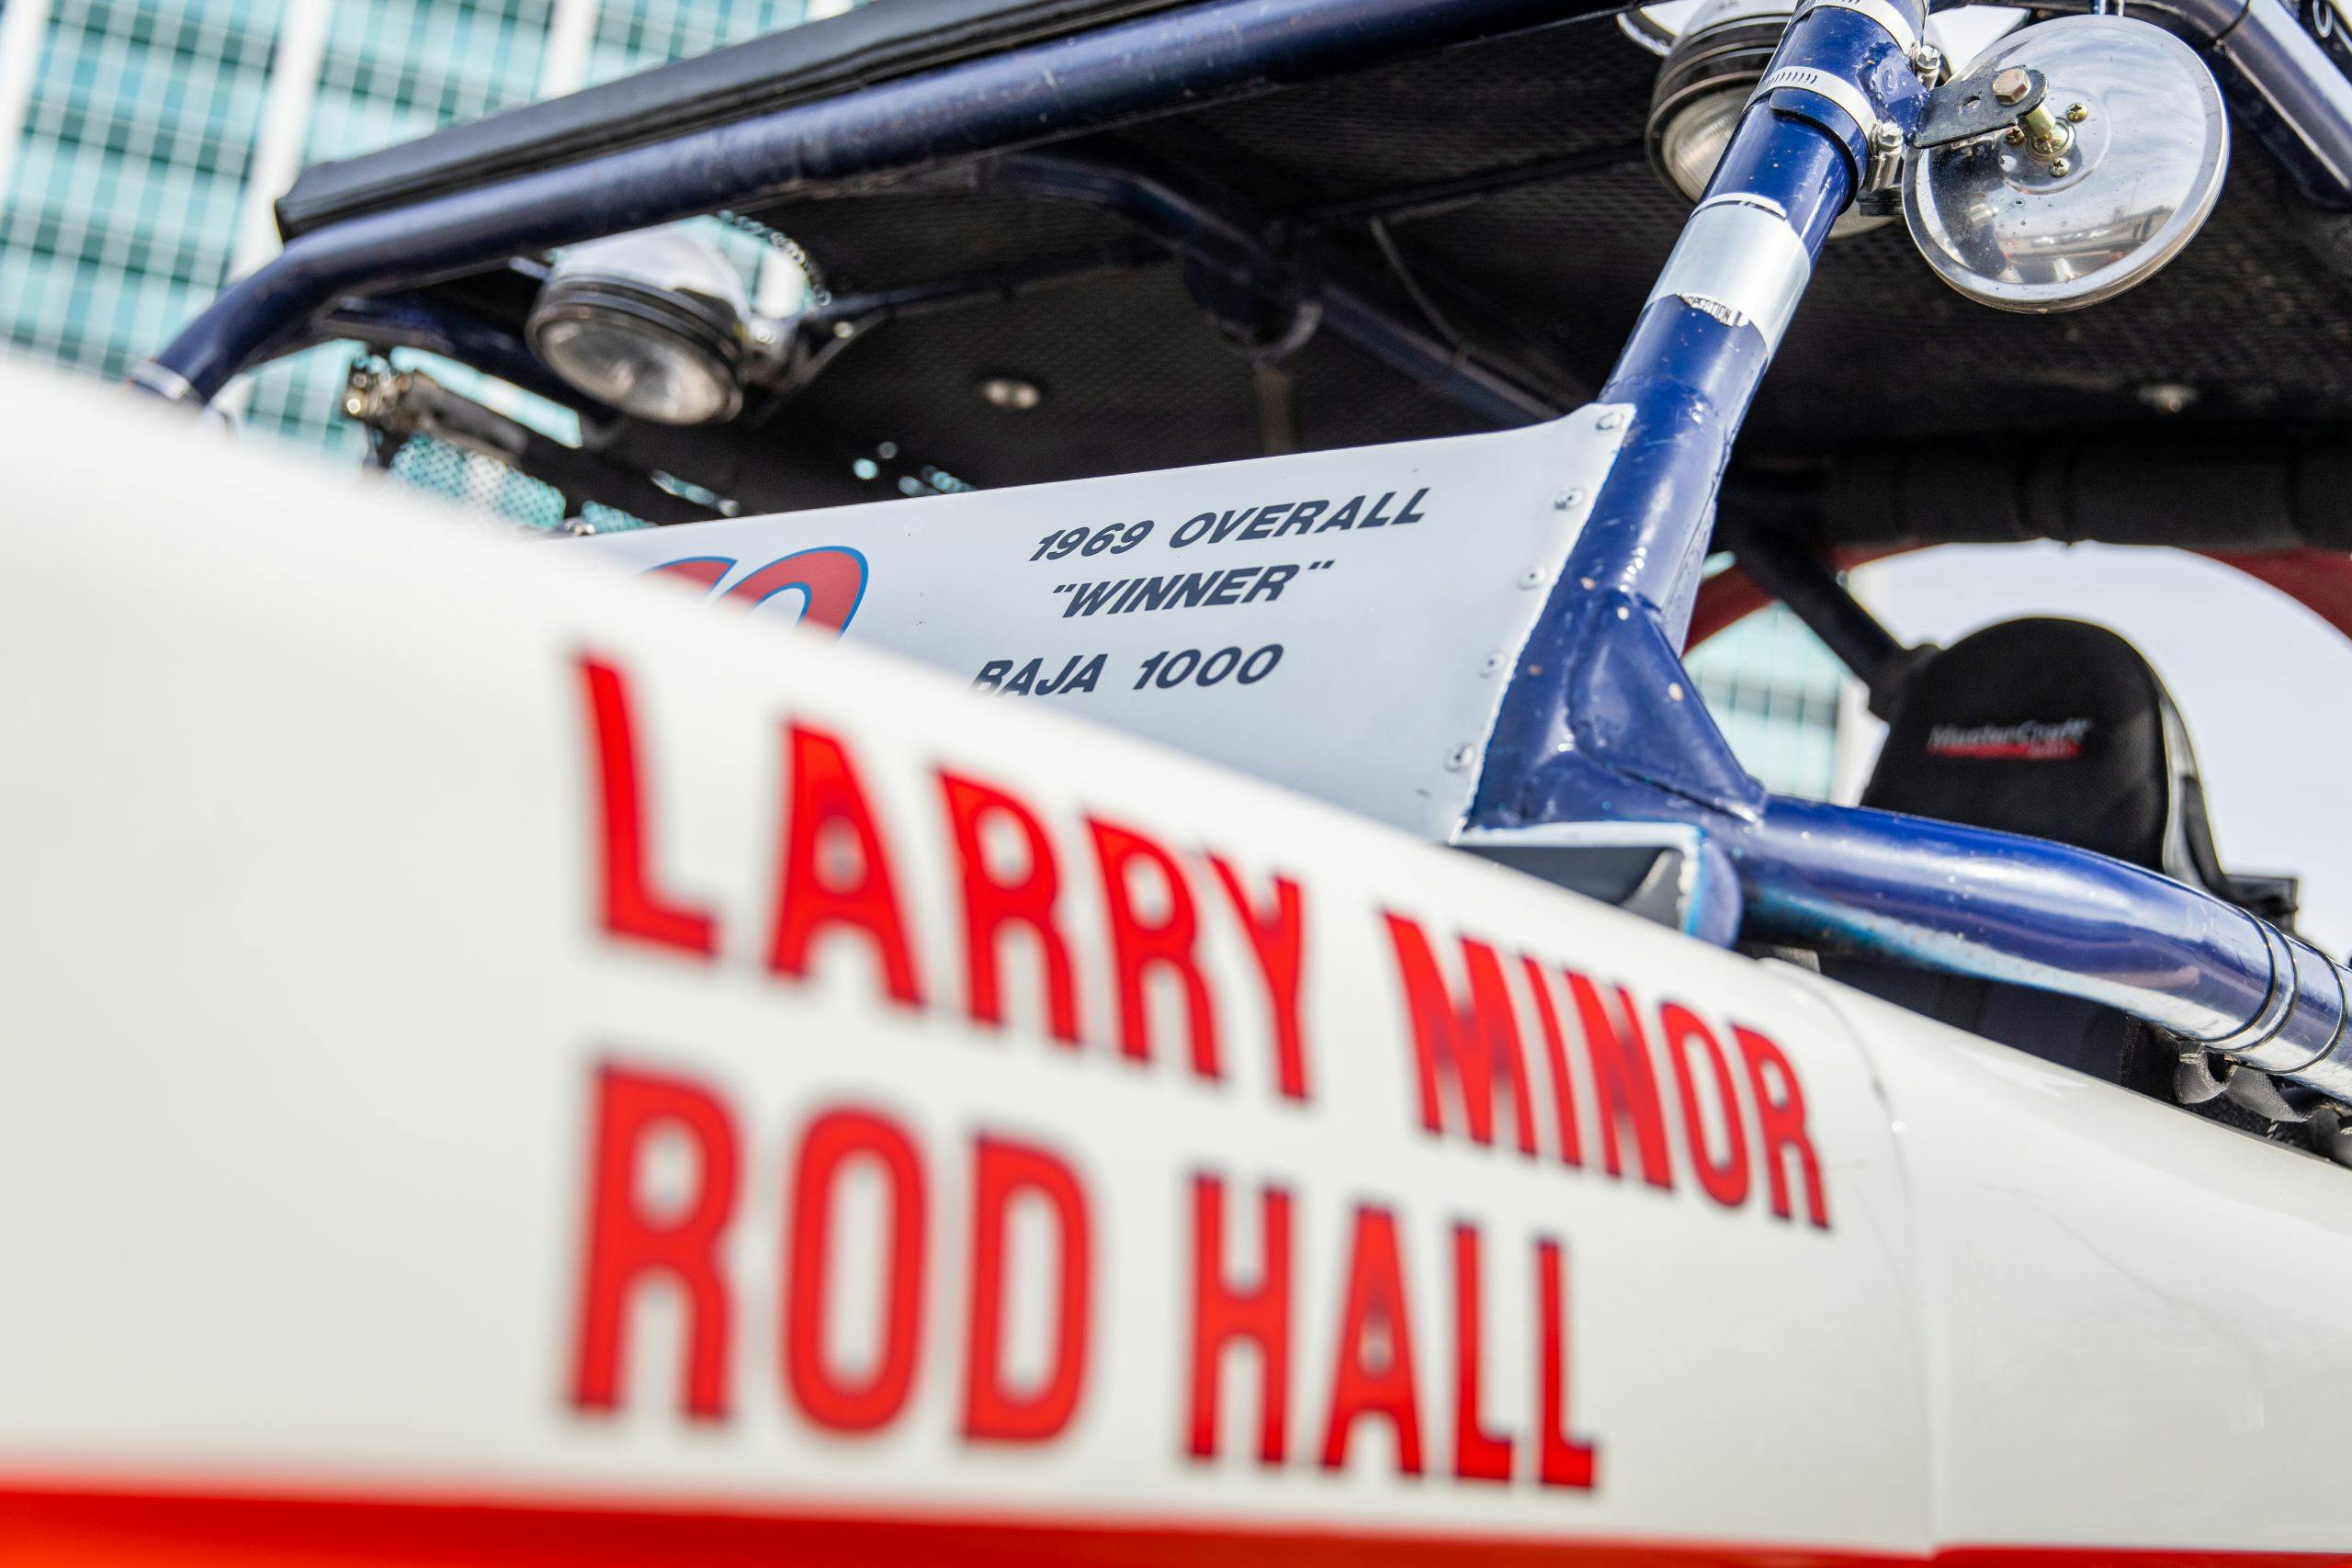 Larry Minor Rodd Hall Baja racing Bronco